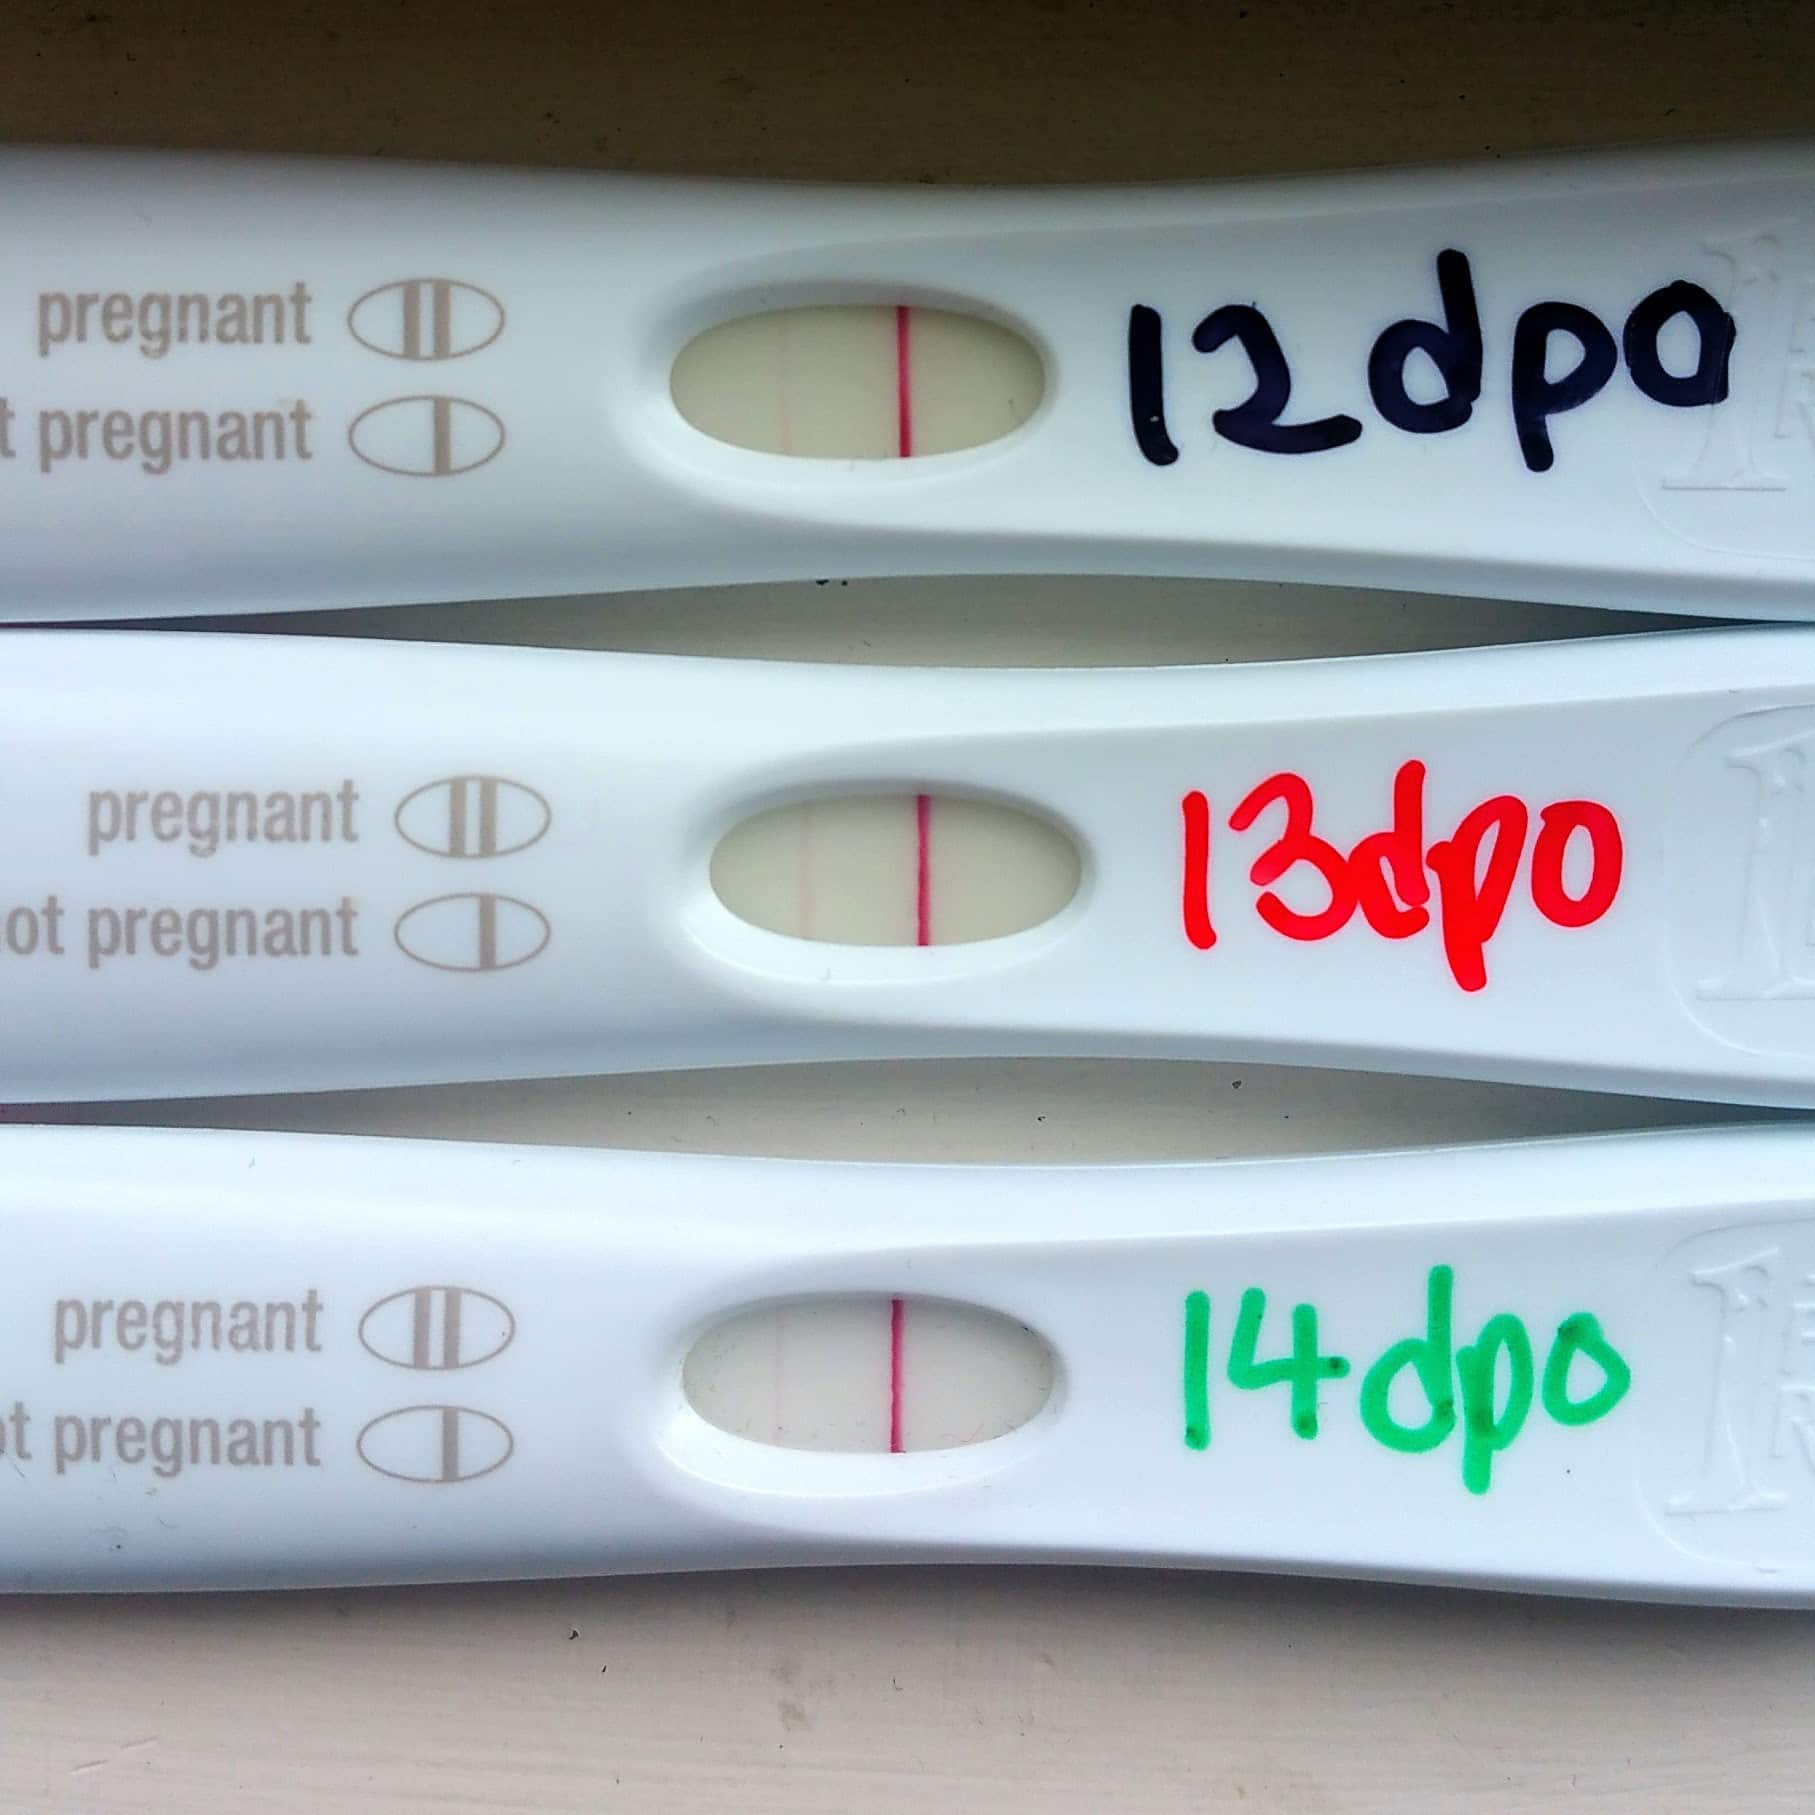 11 Dpo Negative Pregnancy Test Could I Still Be Pregnant